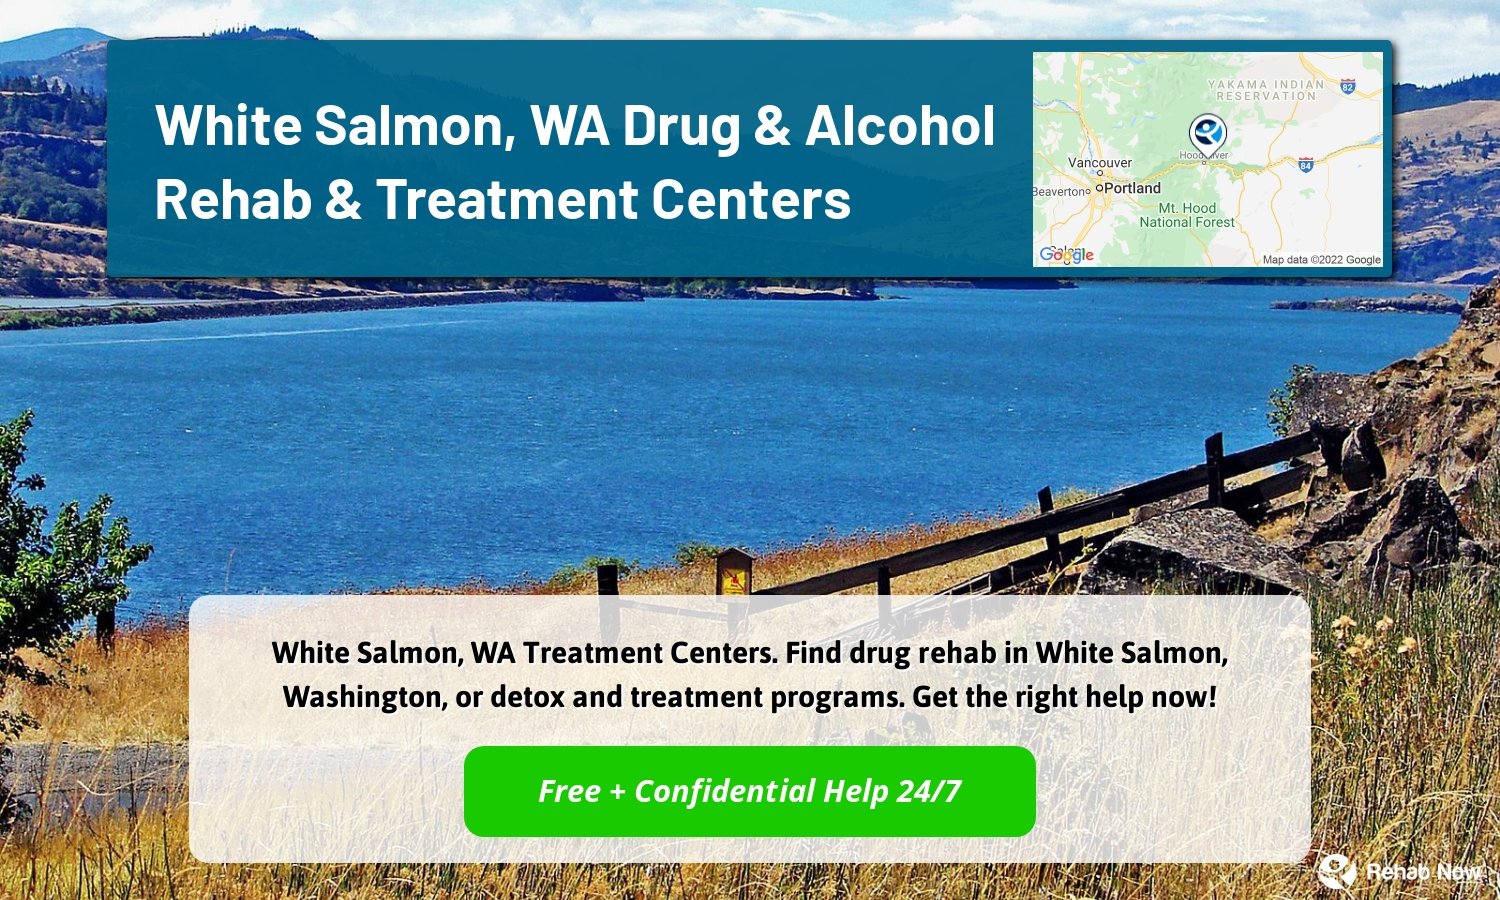 White Salmon, WA Treatment Centers. Find drug rehab in White Salmon, Washington, or detox and treatment programs. Get the right help now!